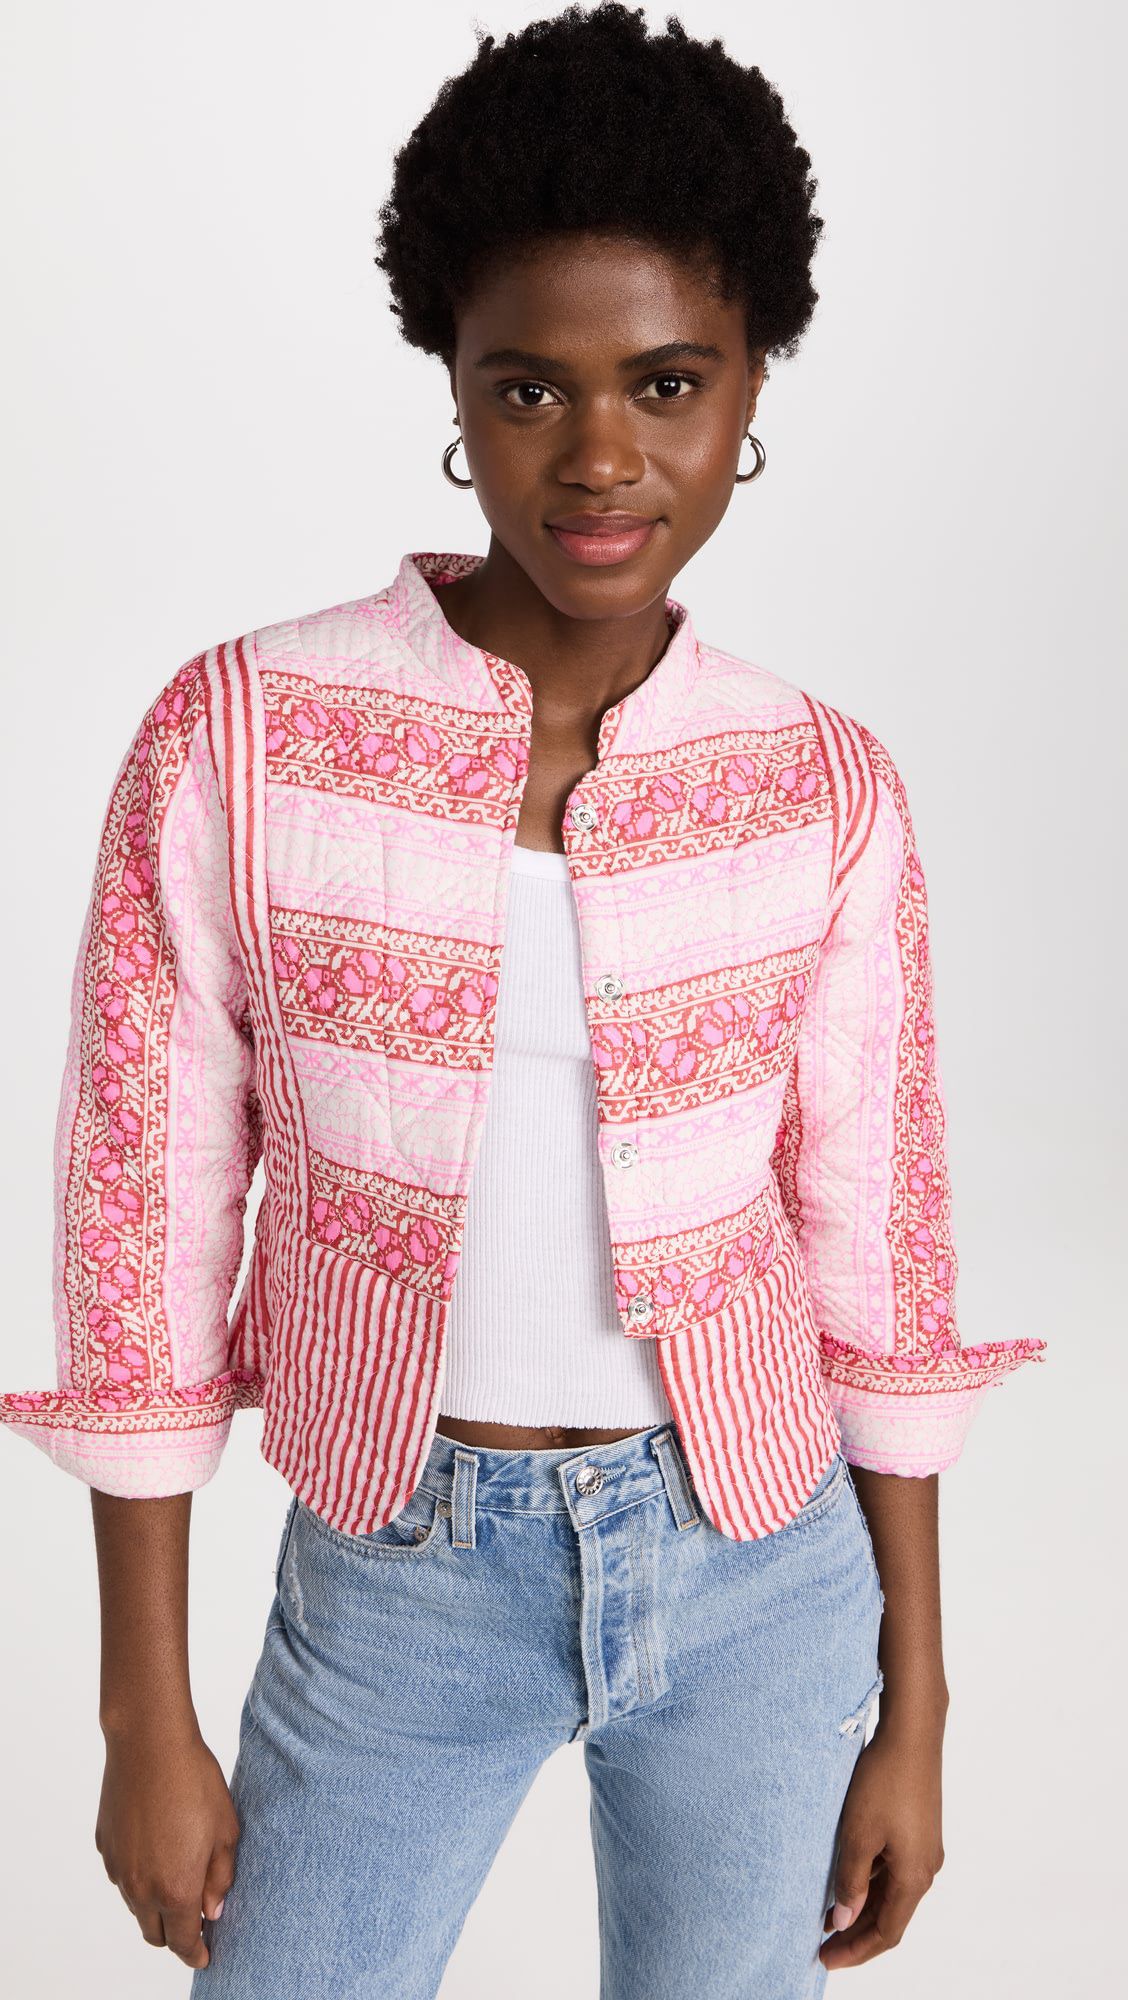 OEM Pink patchwork striped cotton jacket